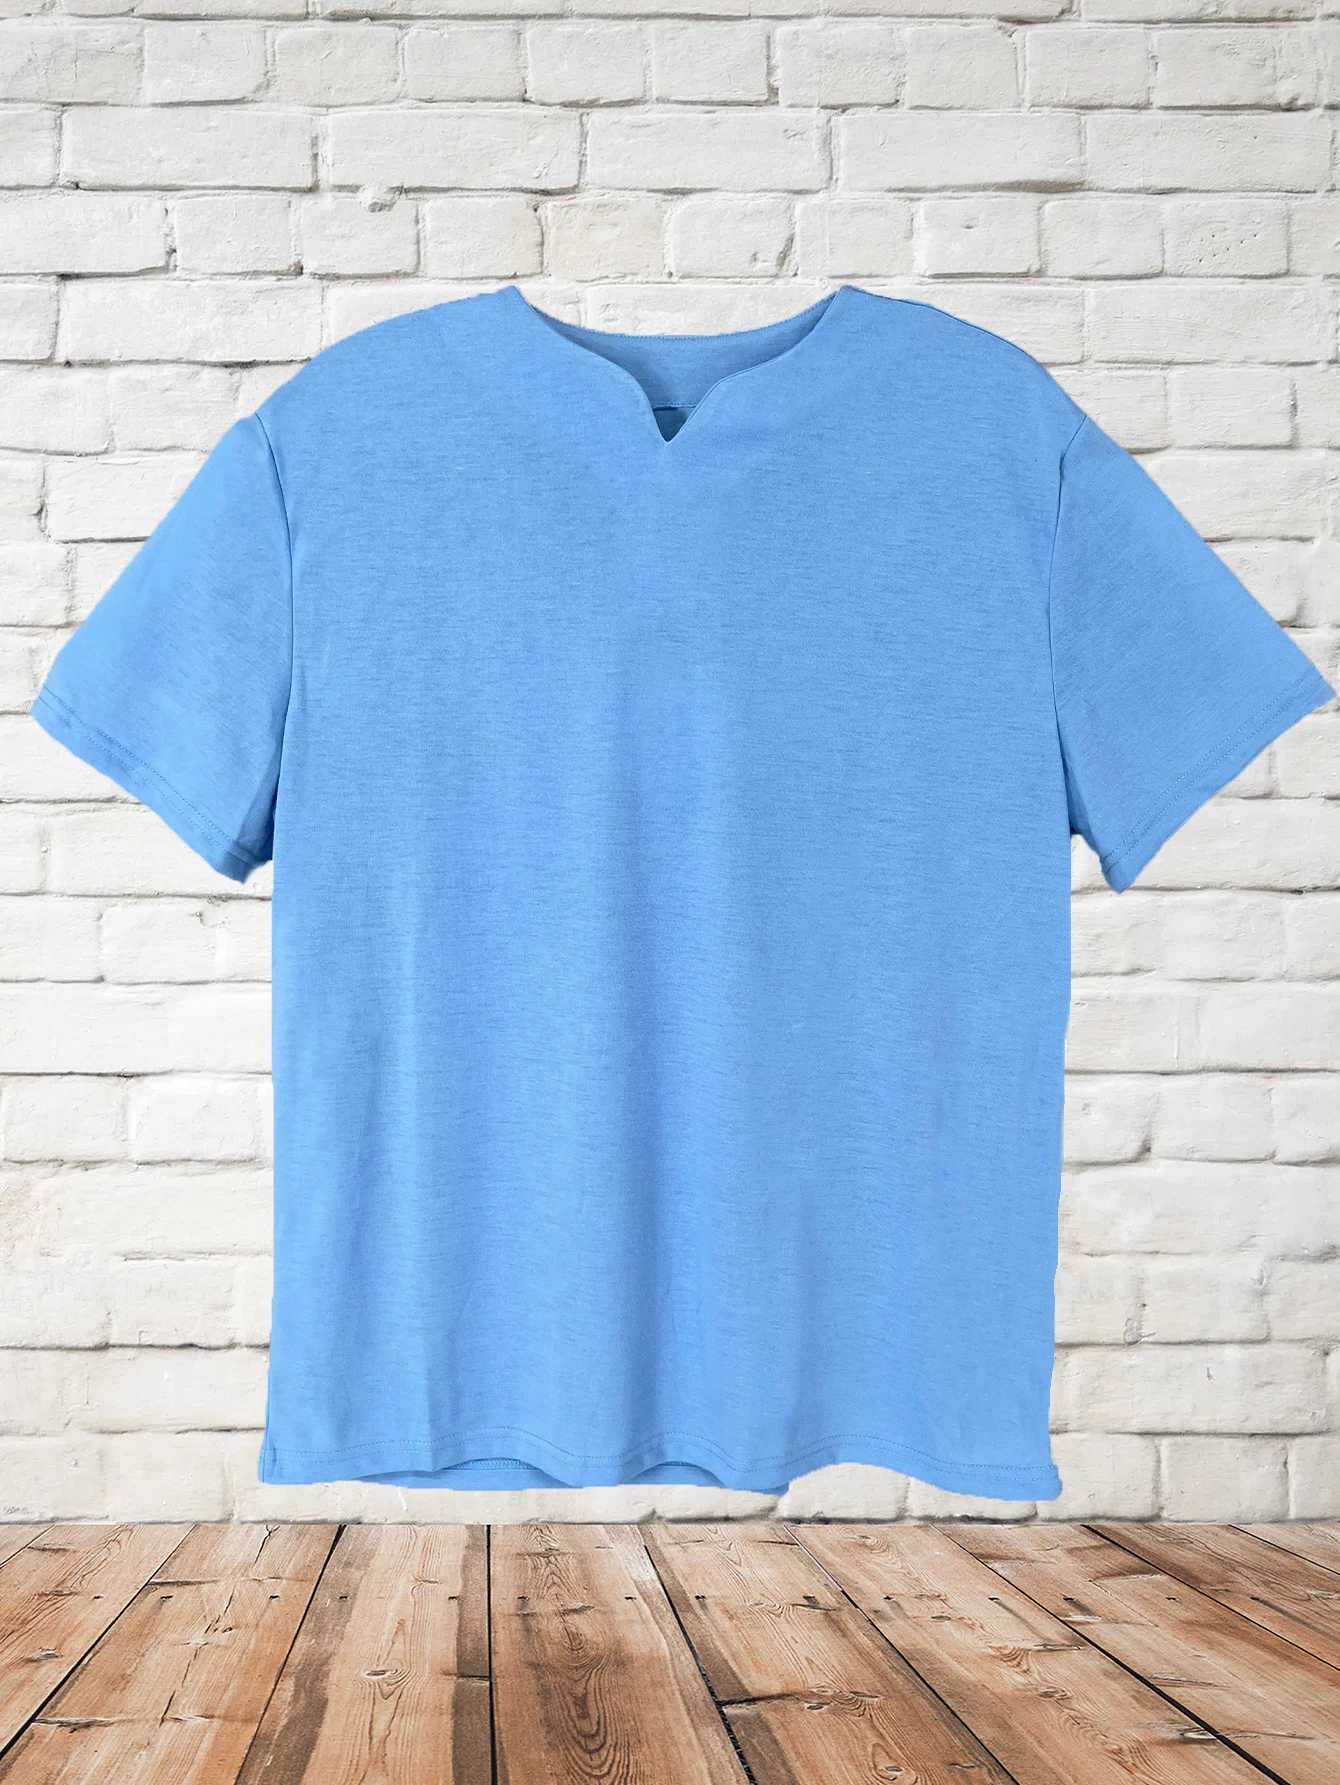 Camisetas masculinas tushangge mass camisetas pólo de manga curta Tops de deco